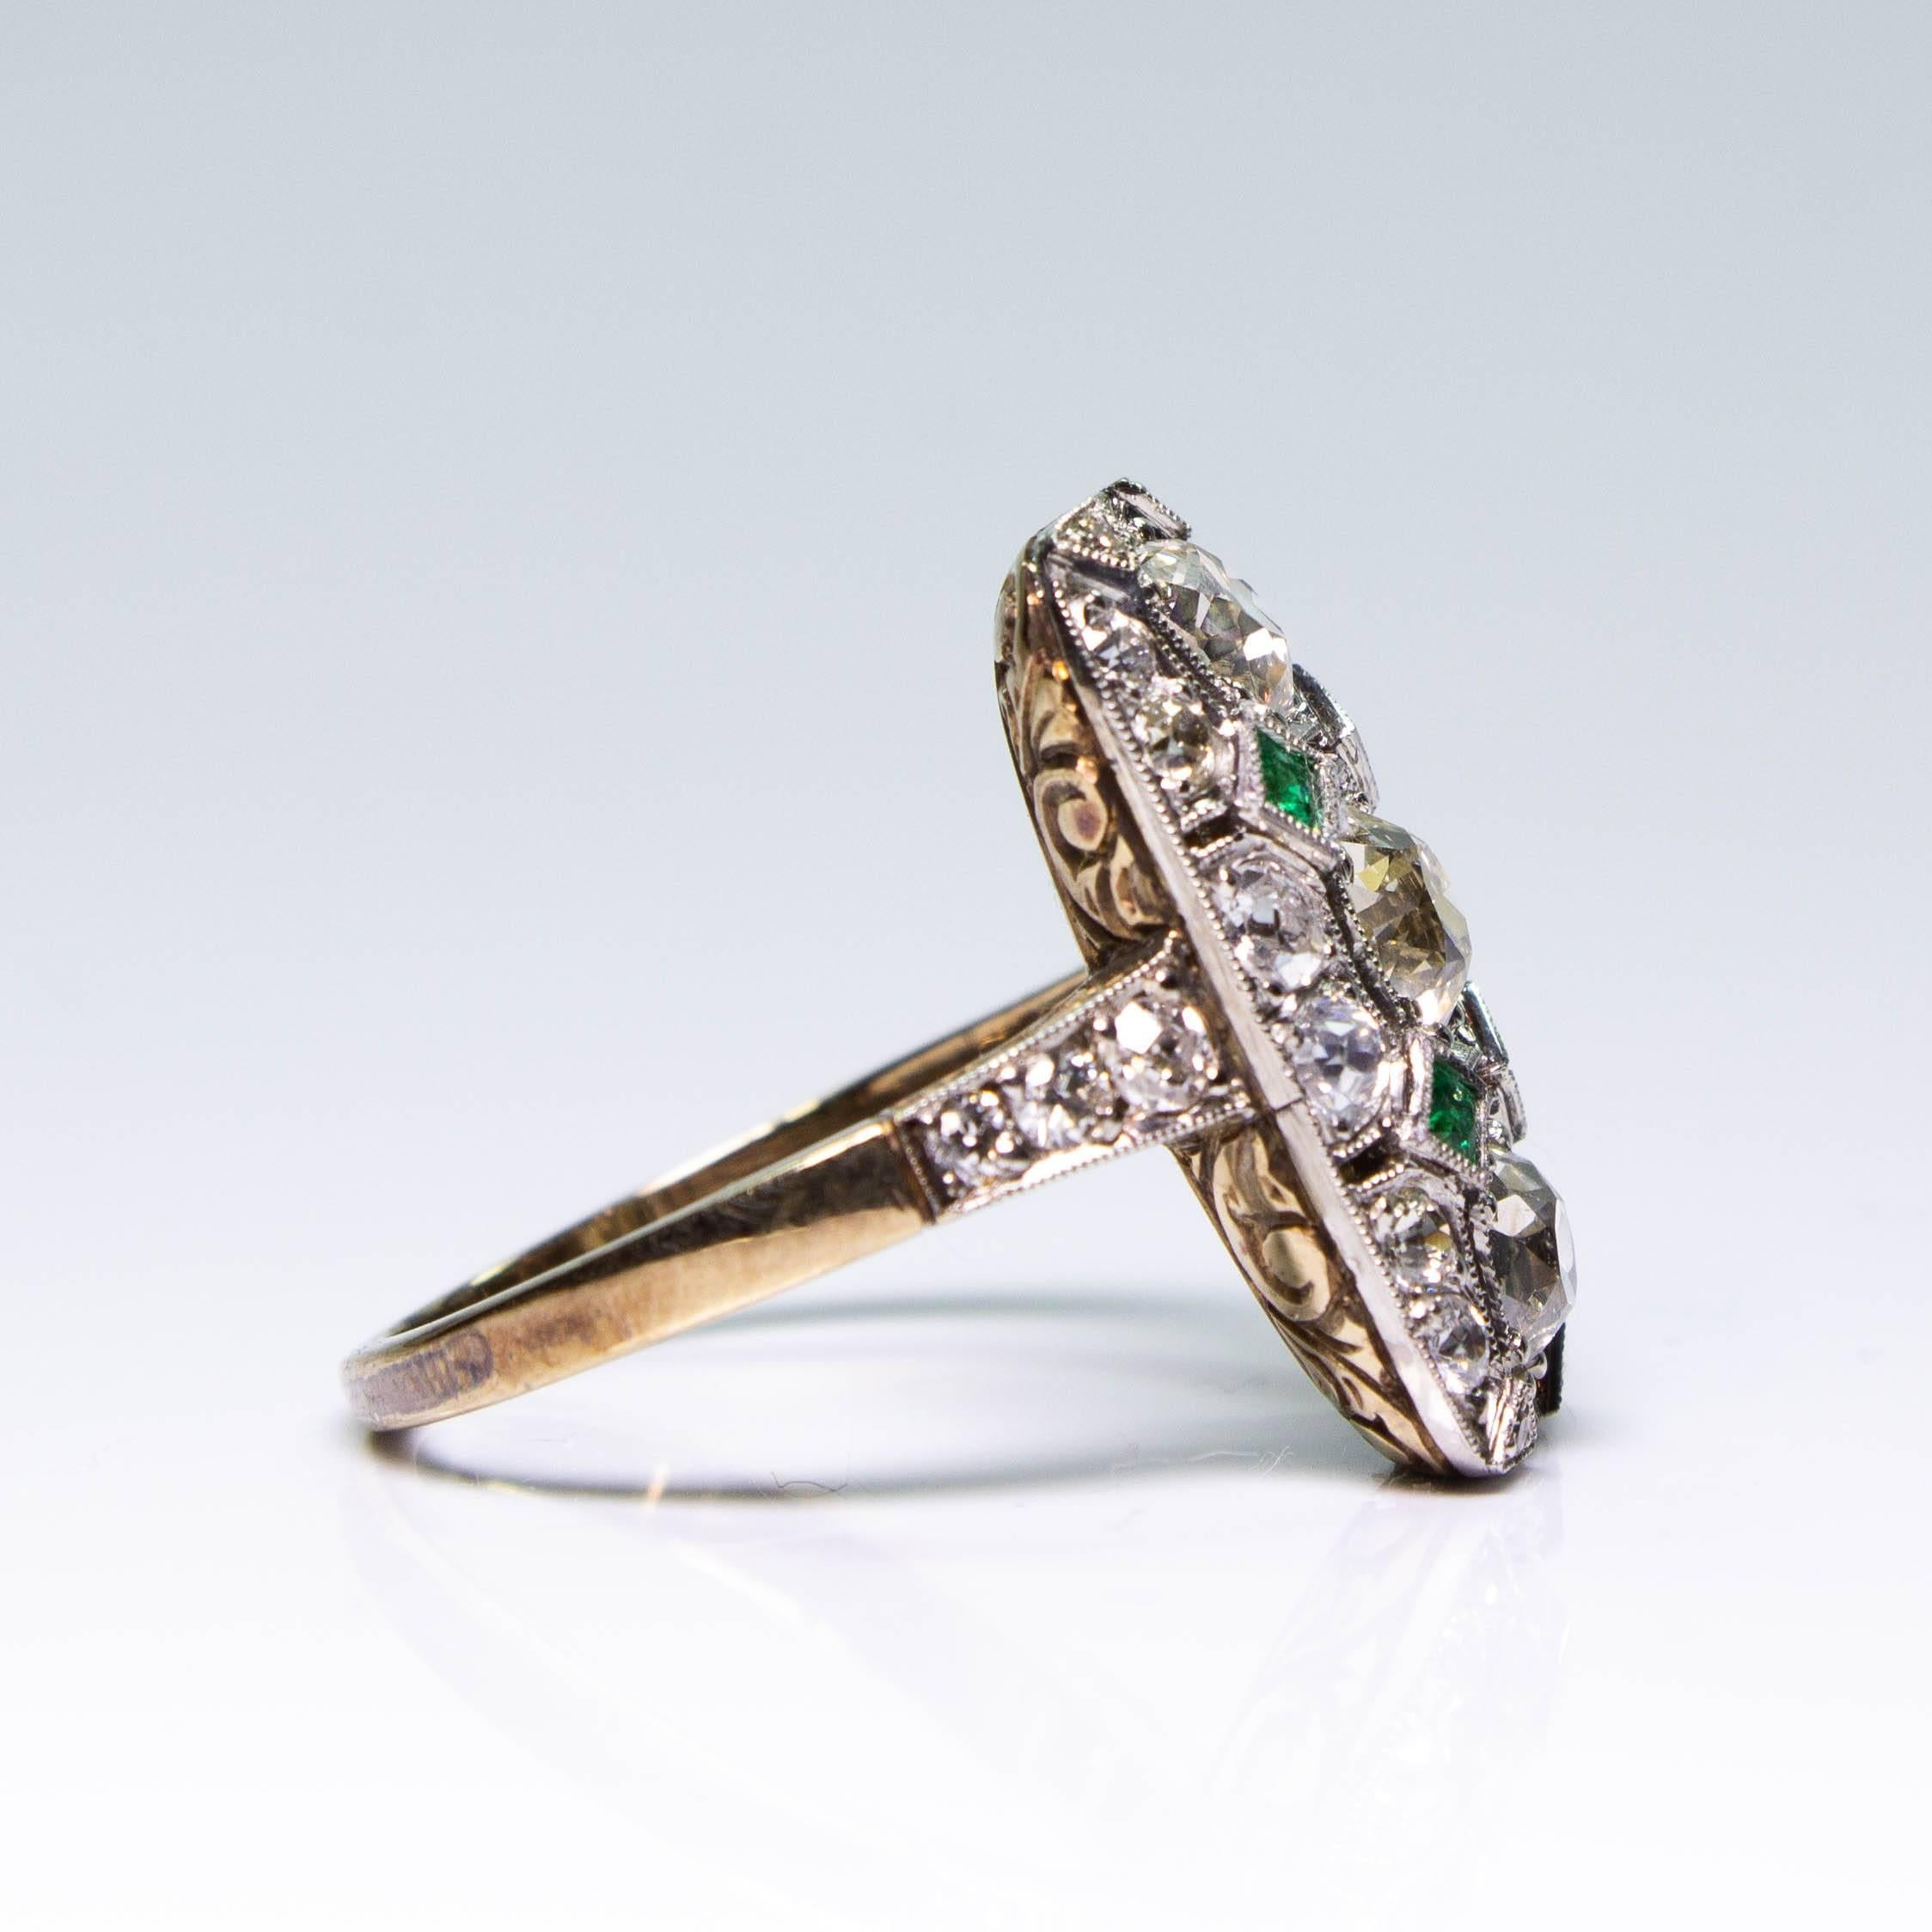 Period: Art Deco (1920-1935)
Composition: 18K gold and platinum
Stones:
•	3 Old mine cut diamonds of J/K-VS2/SI1 quality that weigh 1.45ctw. 
•	24 Old mine cut diamonds of I/J-VS2 quality that weigh 0.82ctw.
•	4 natural calibrated cut emeralds that